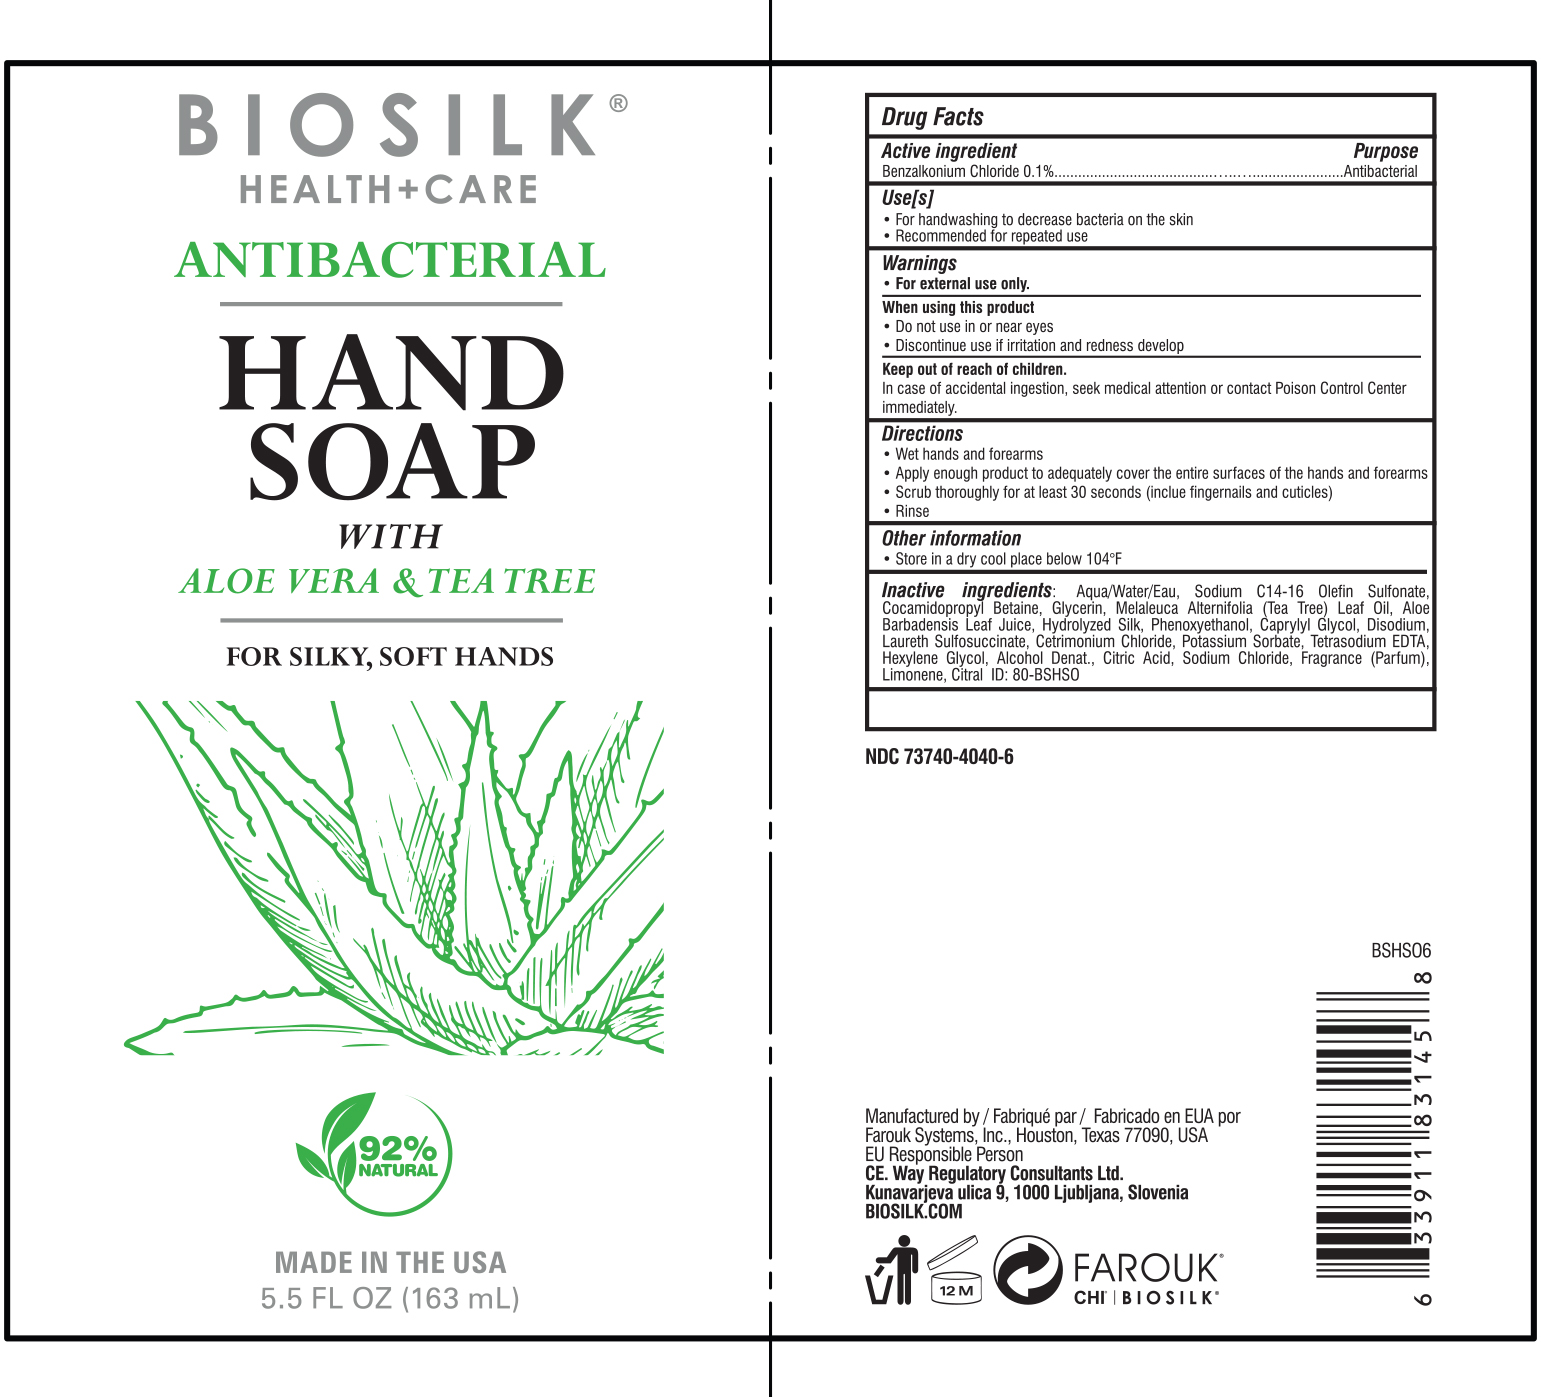 BSHS06 Biosilk Antibacterial Hand Soap Label 6oz